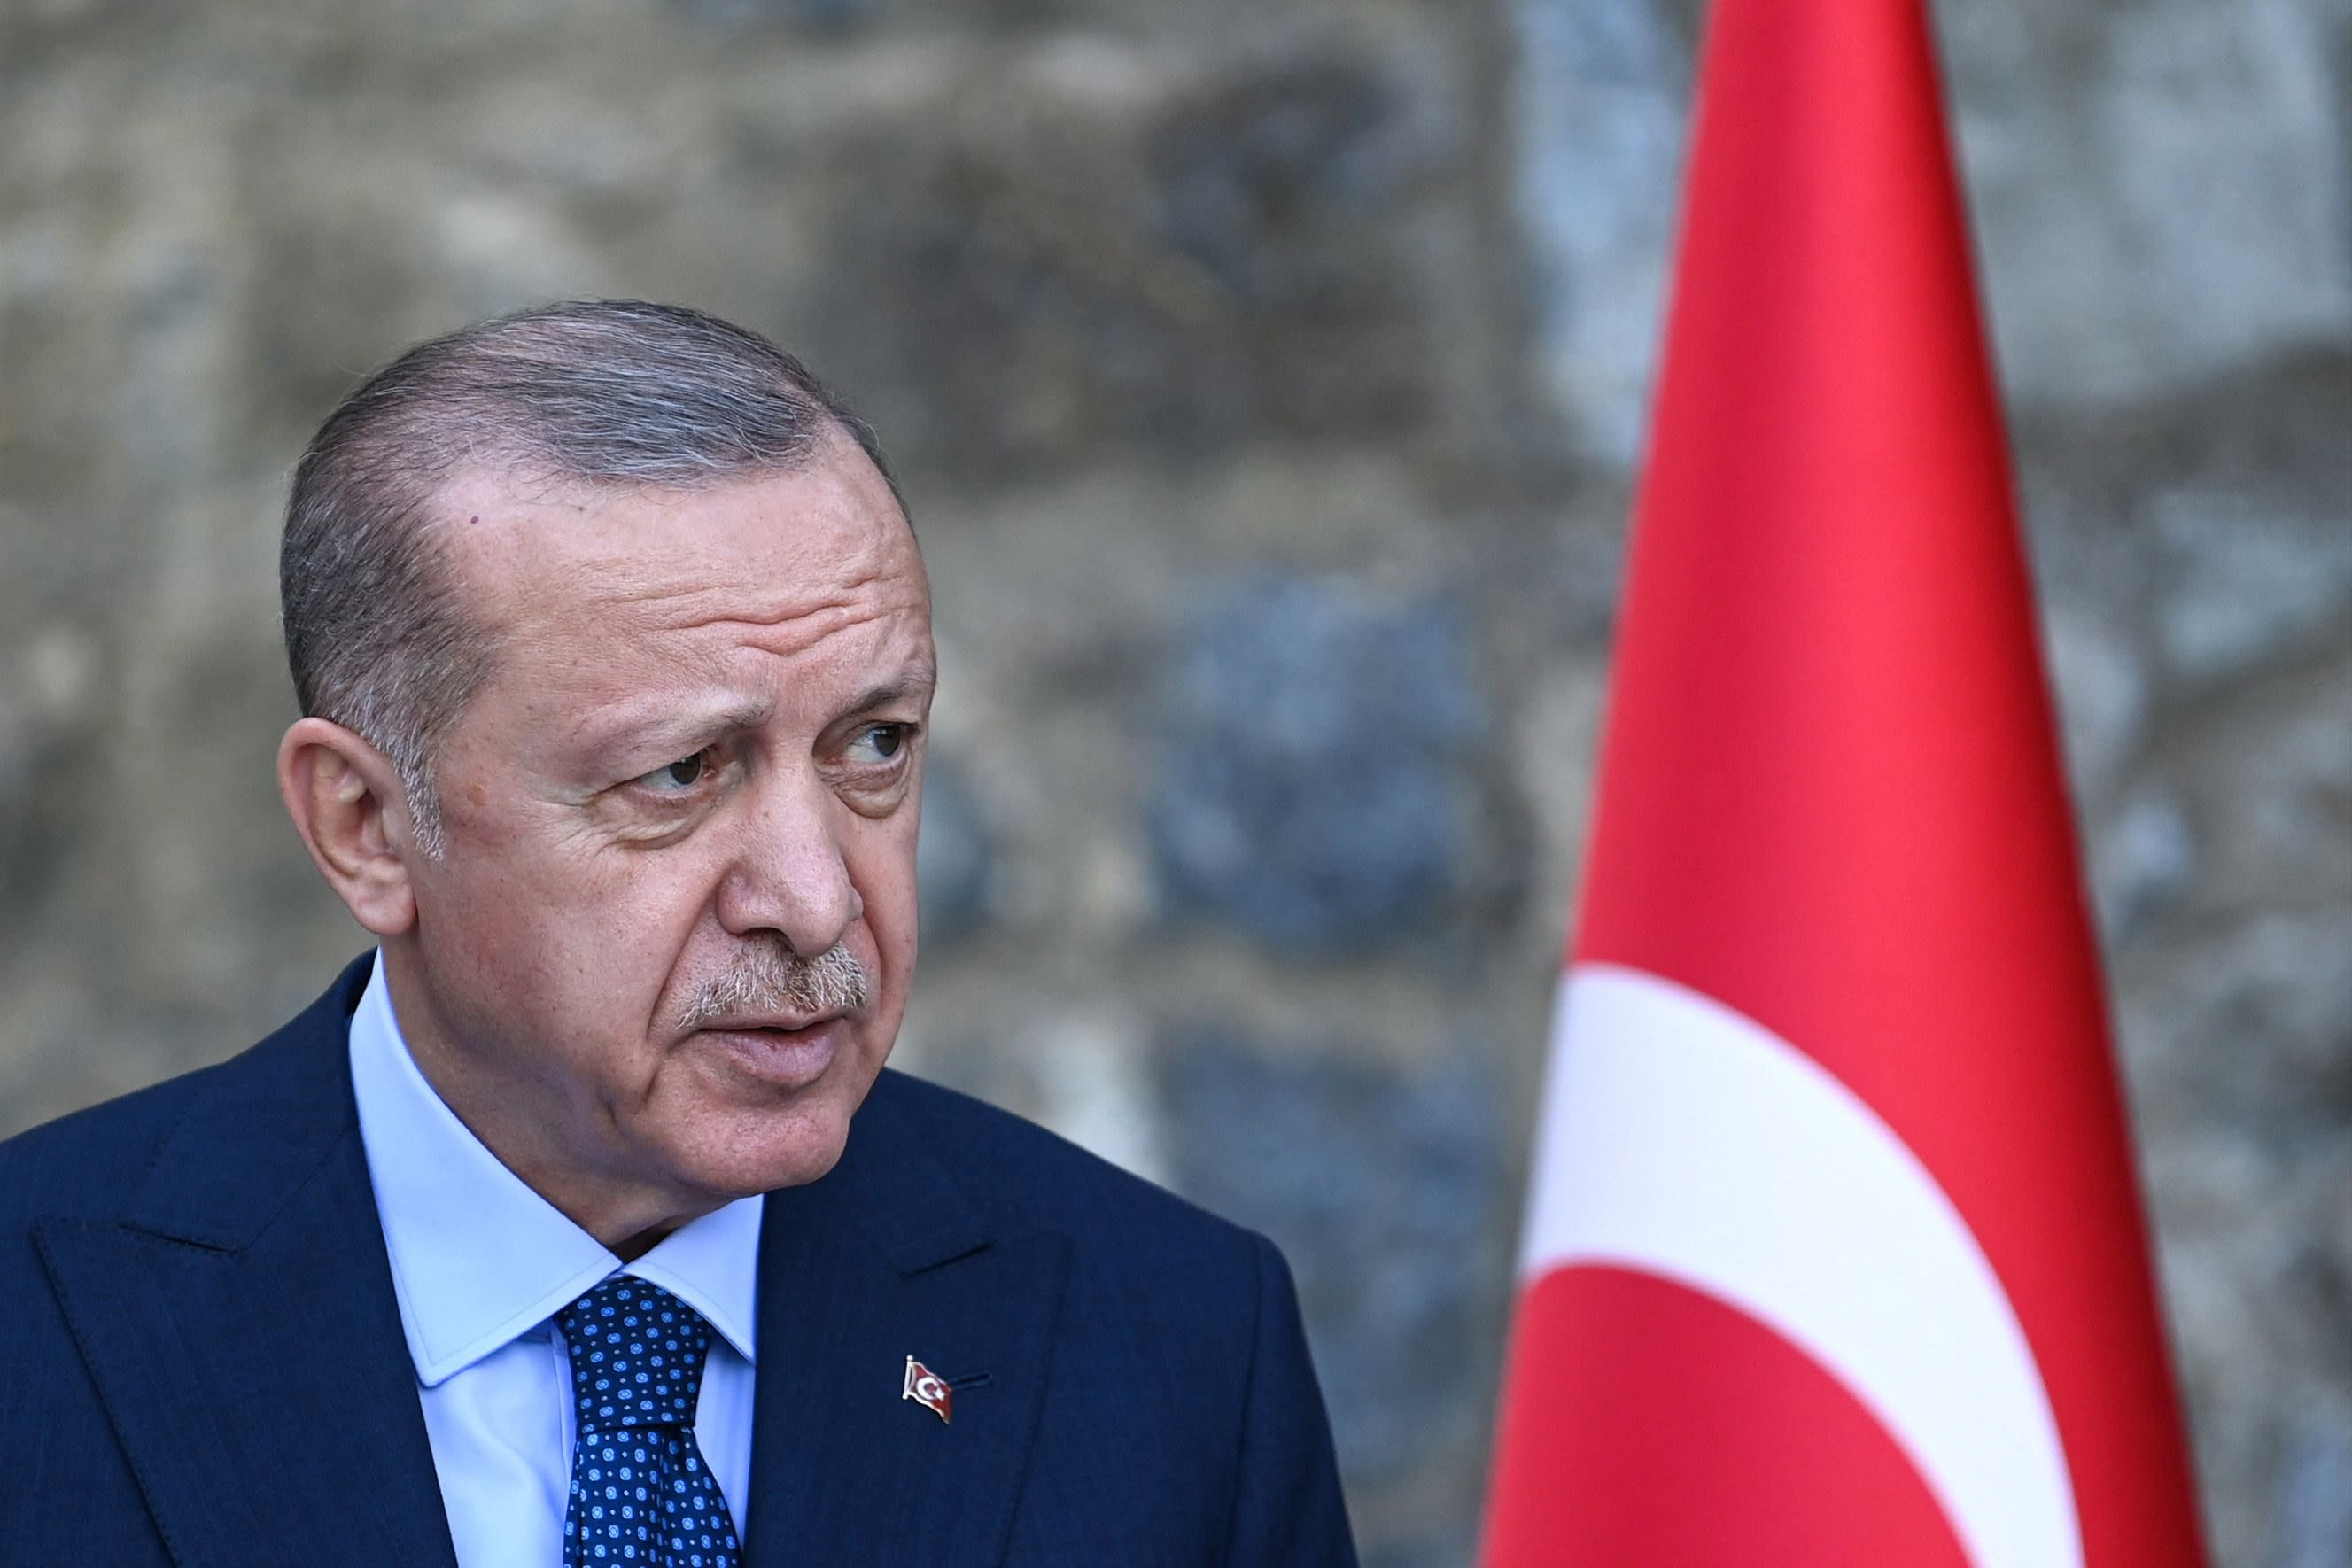 The President of Turkey threatens to expel the Finnish Ambassador